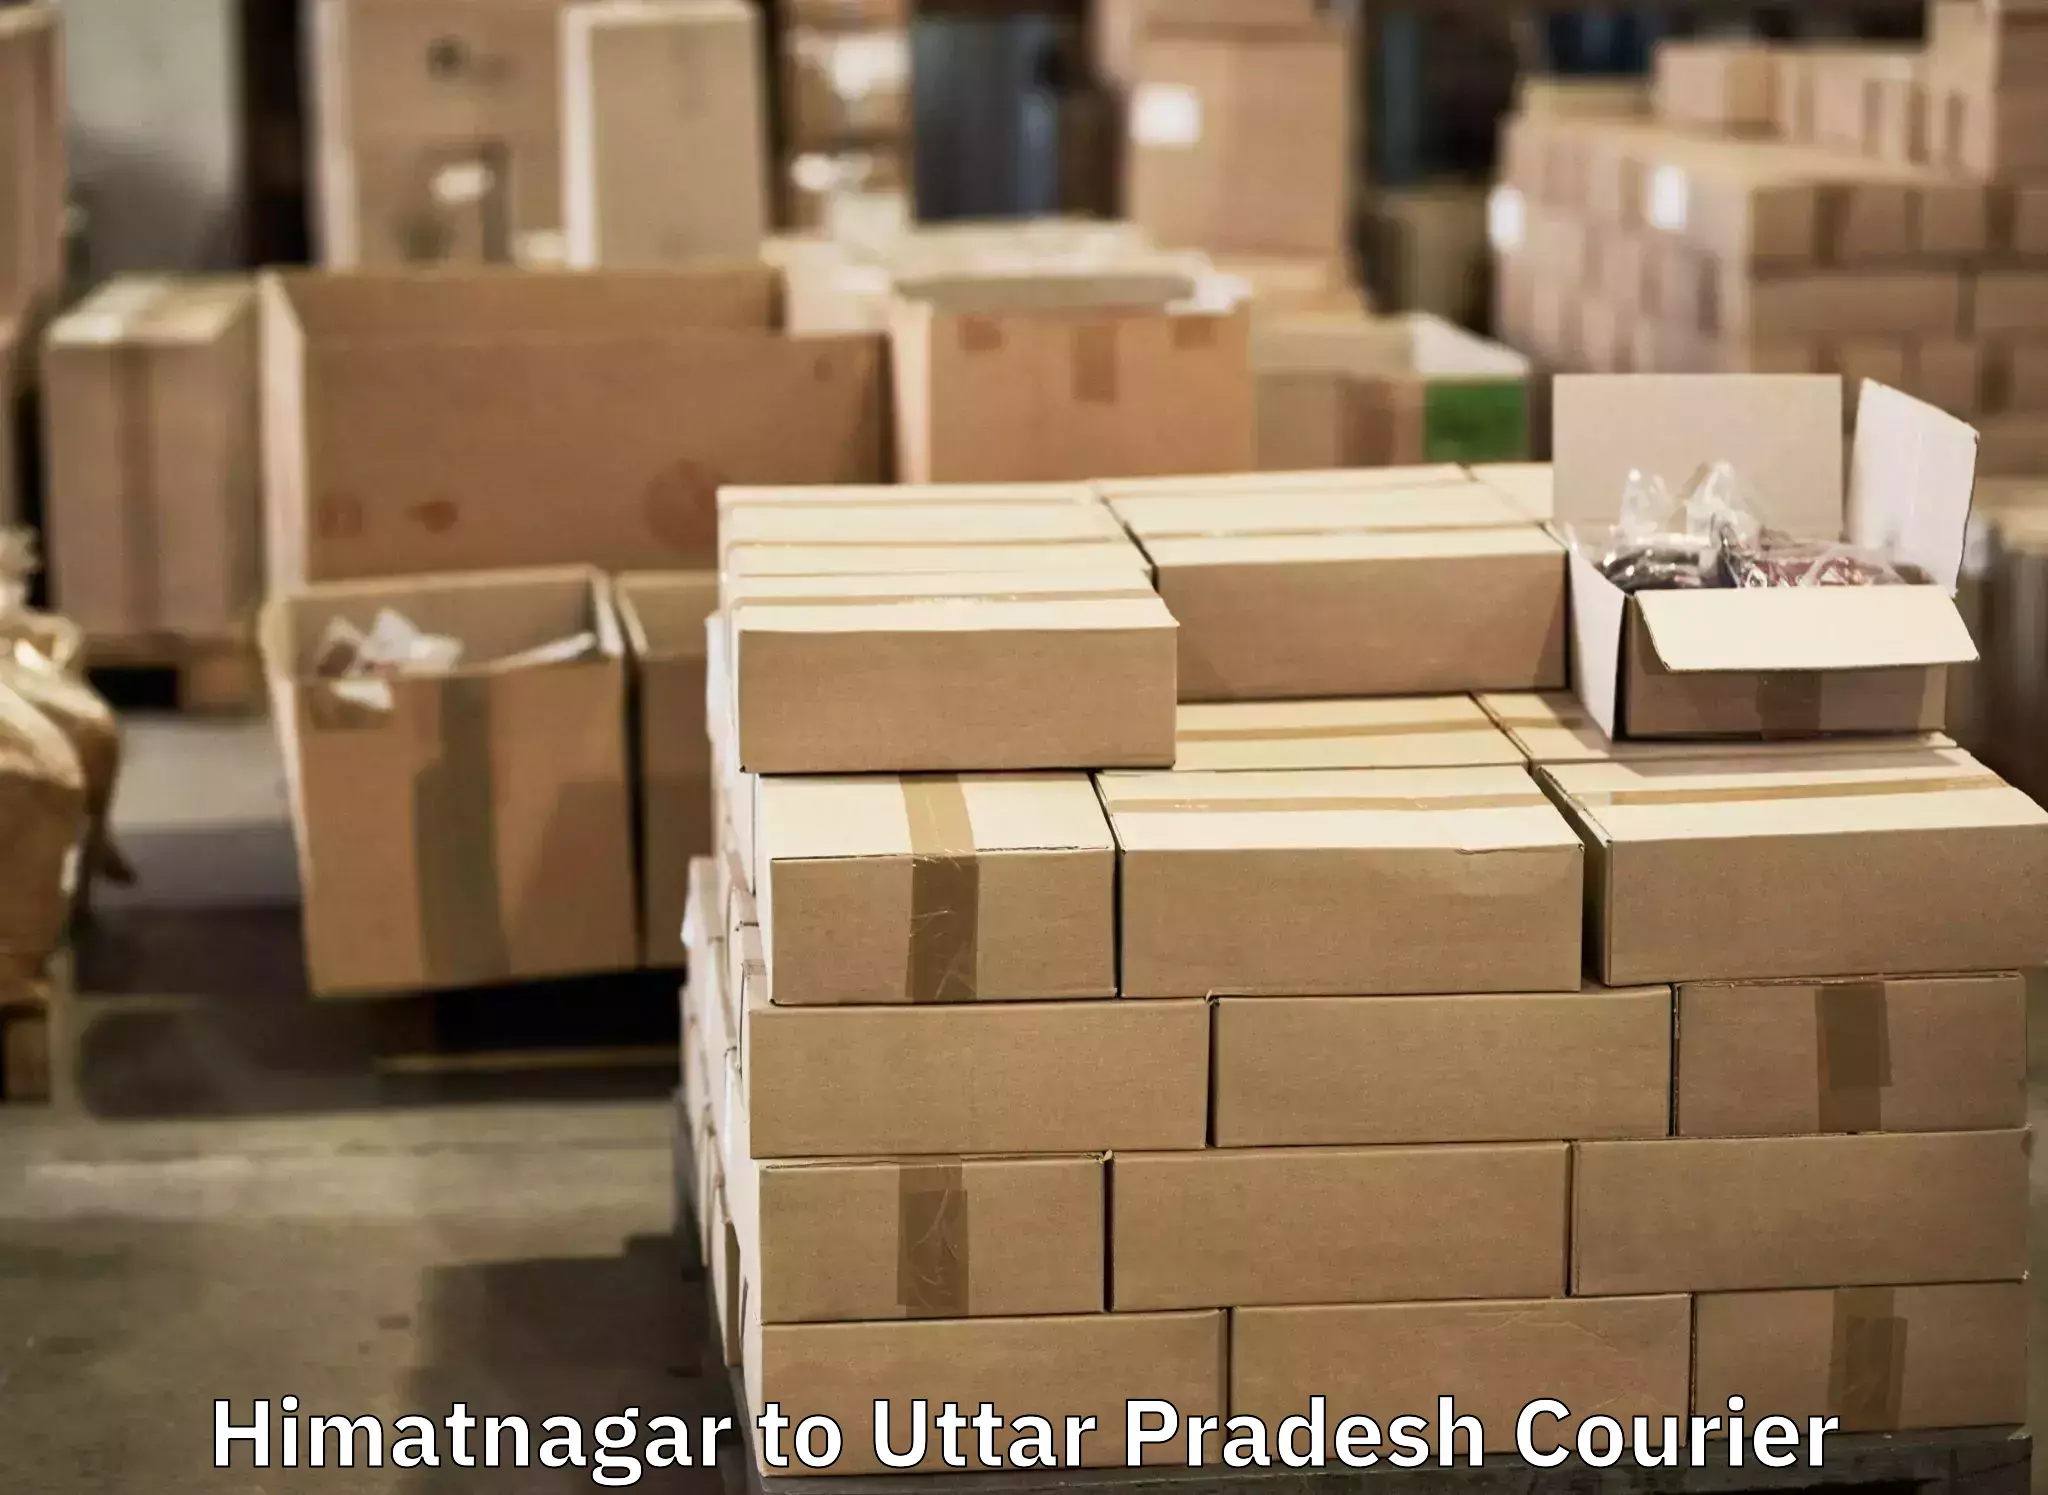 Luggage delivery network Himatnagar to Kairana